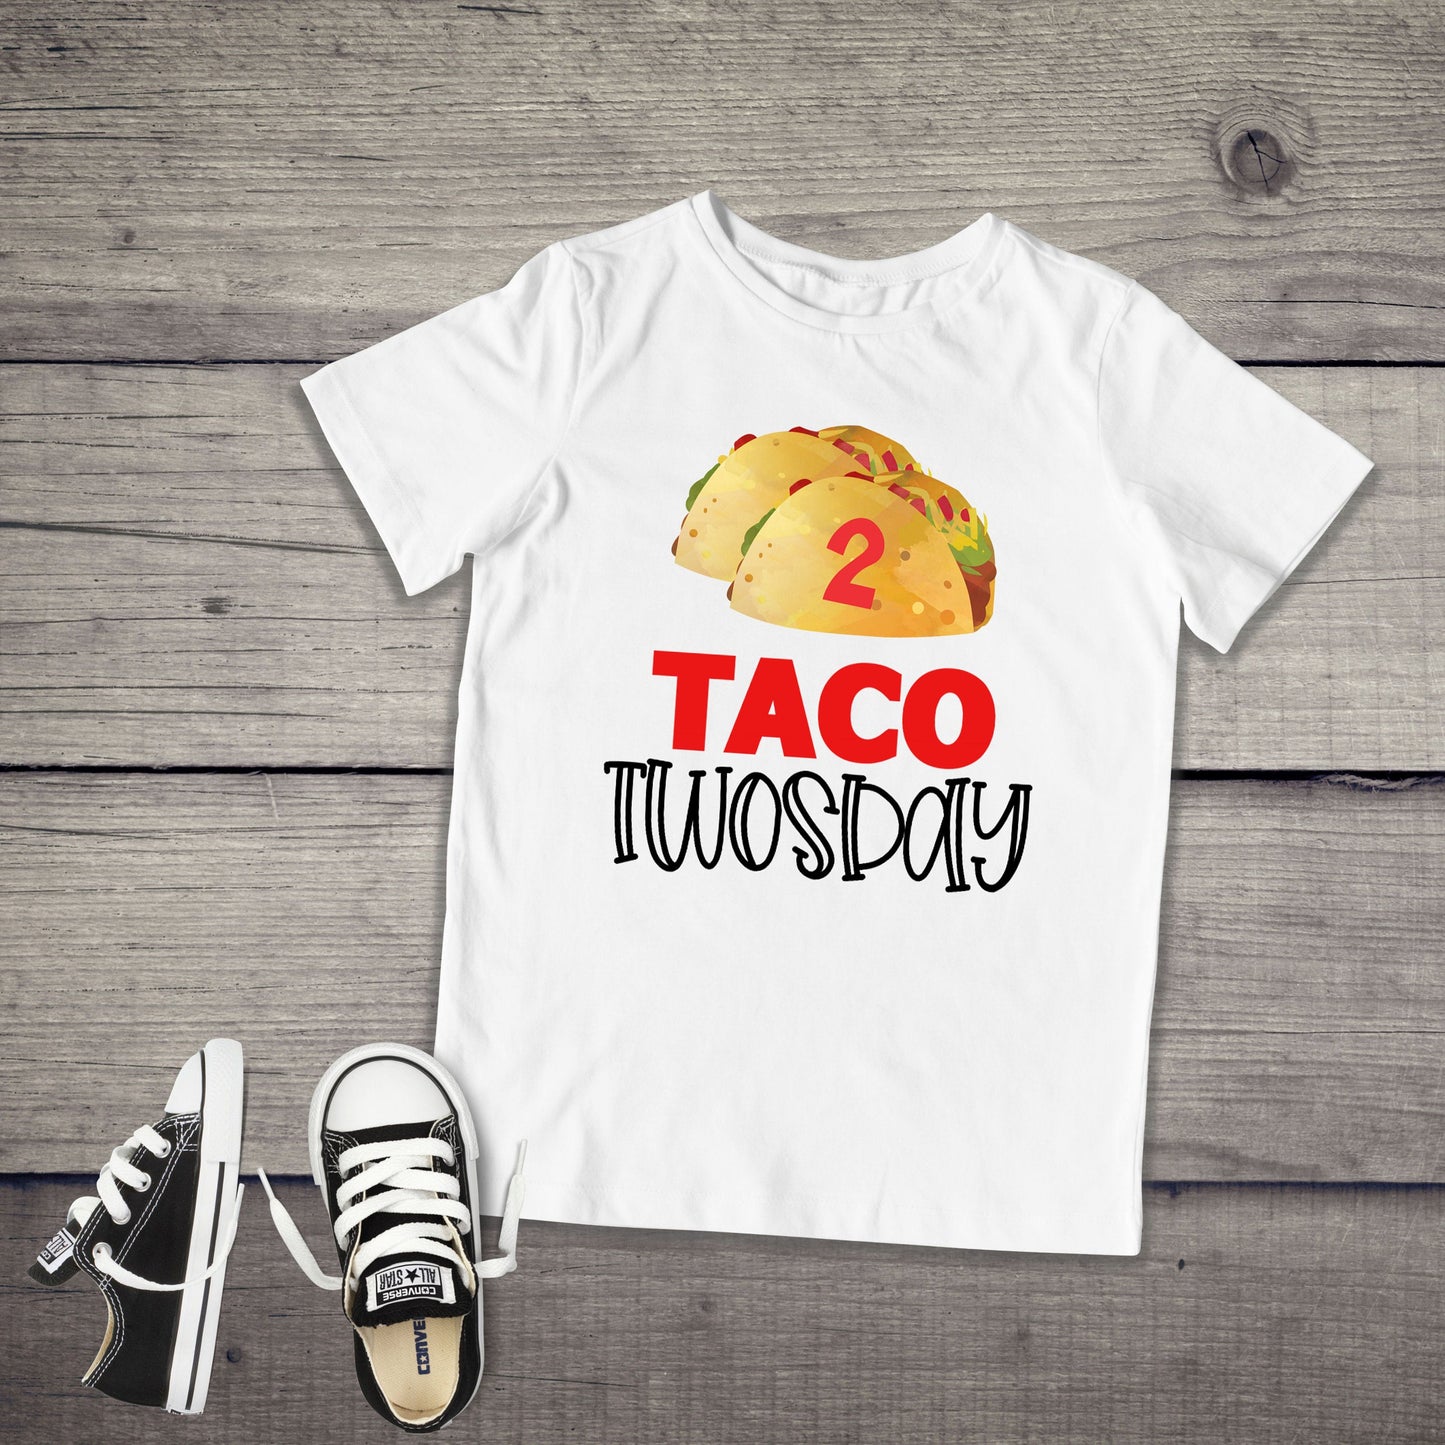 Taco Twosday Infant or Toddler Shirt or Bodysuit - 2nd birthday shirt - taco shirt